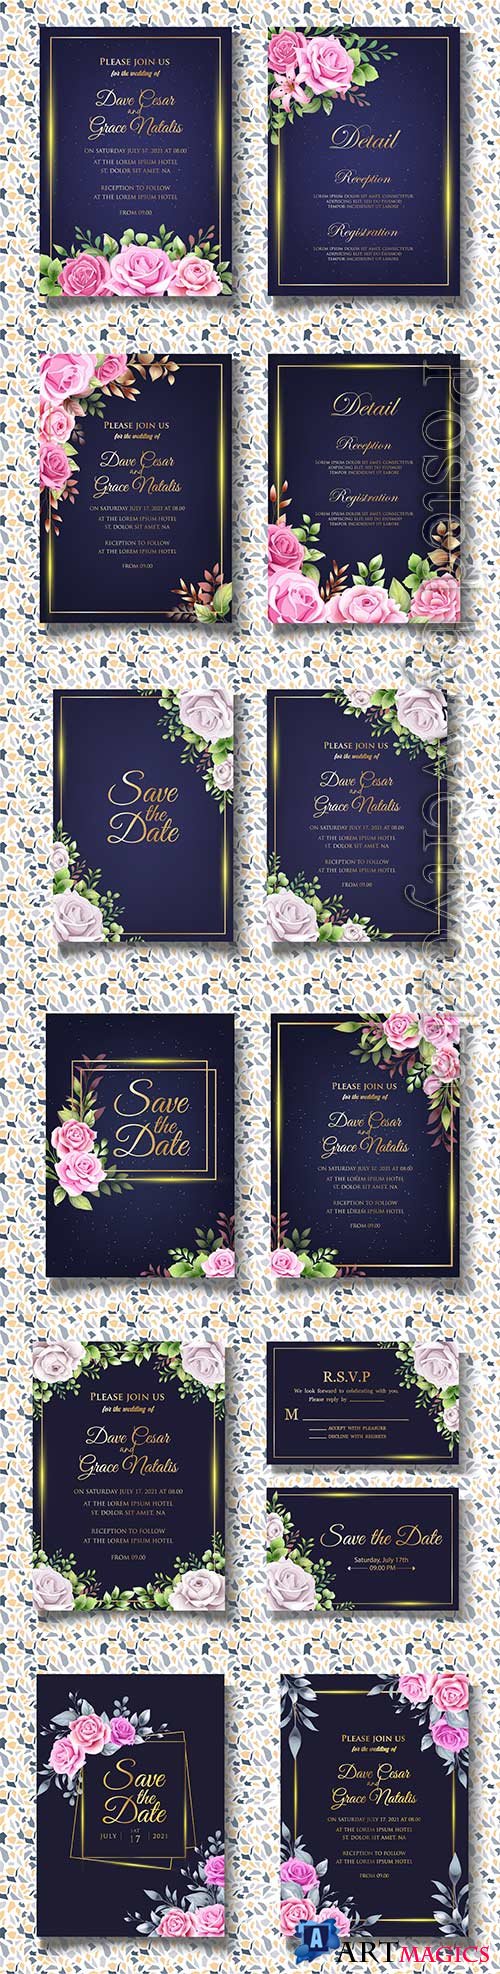 Floral wedding invitation vector template